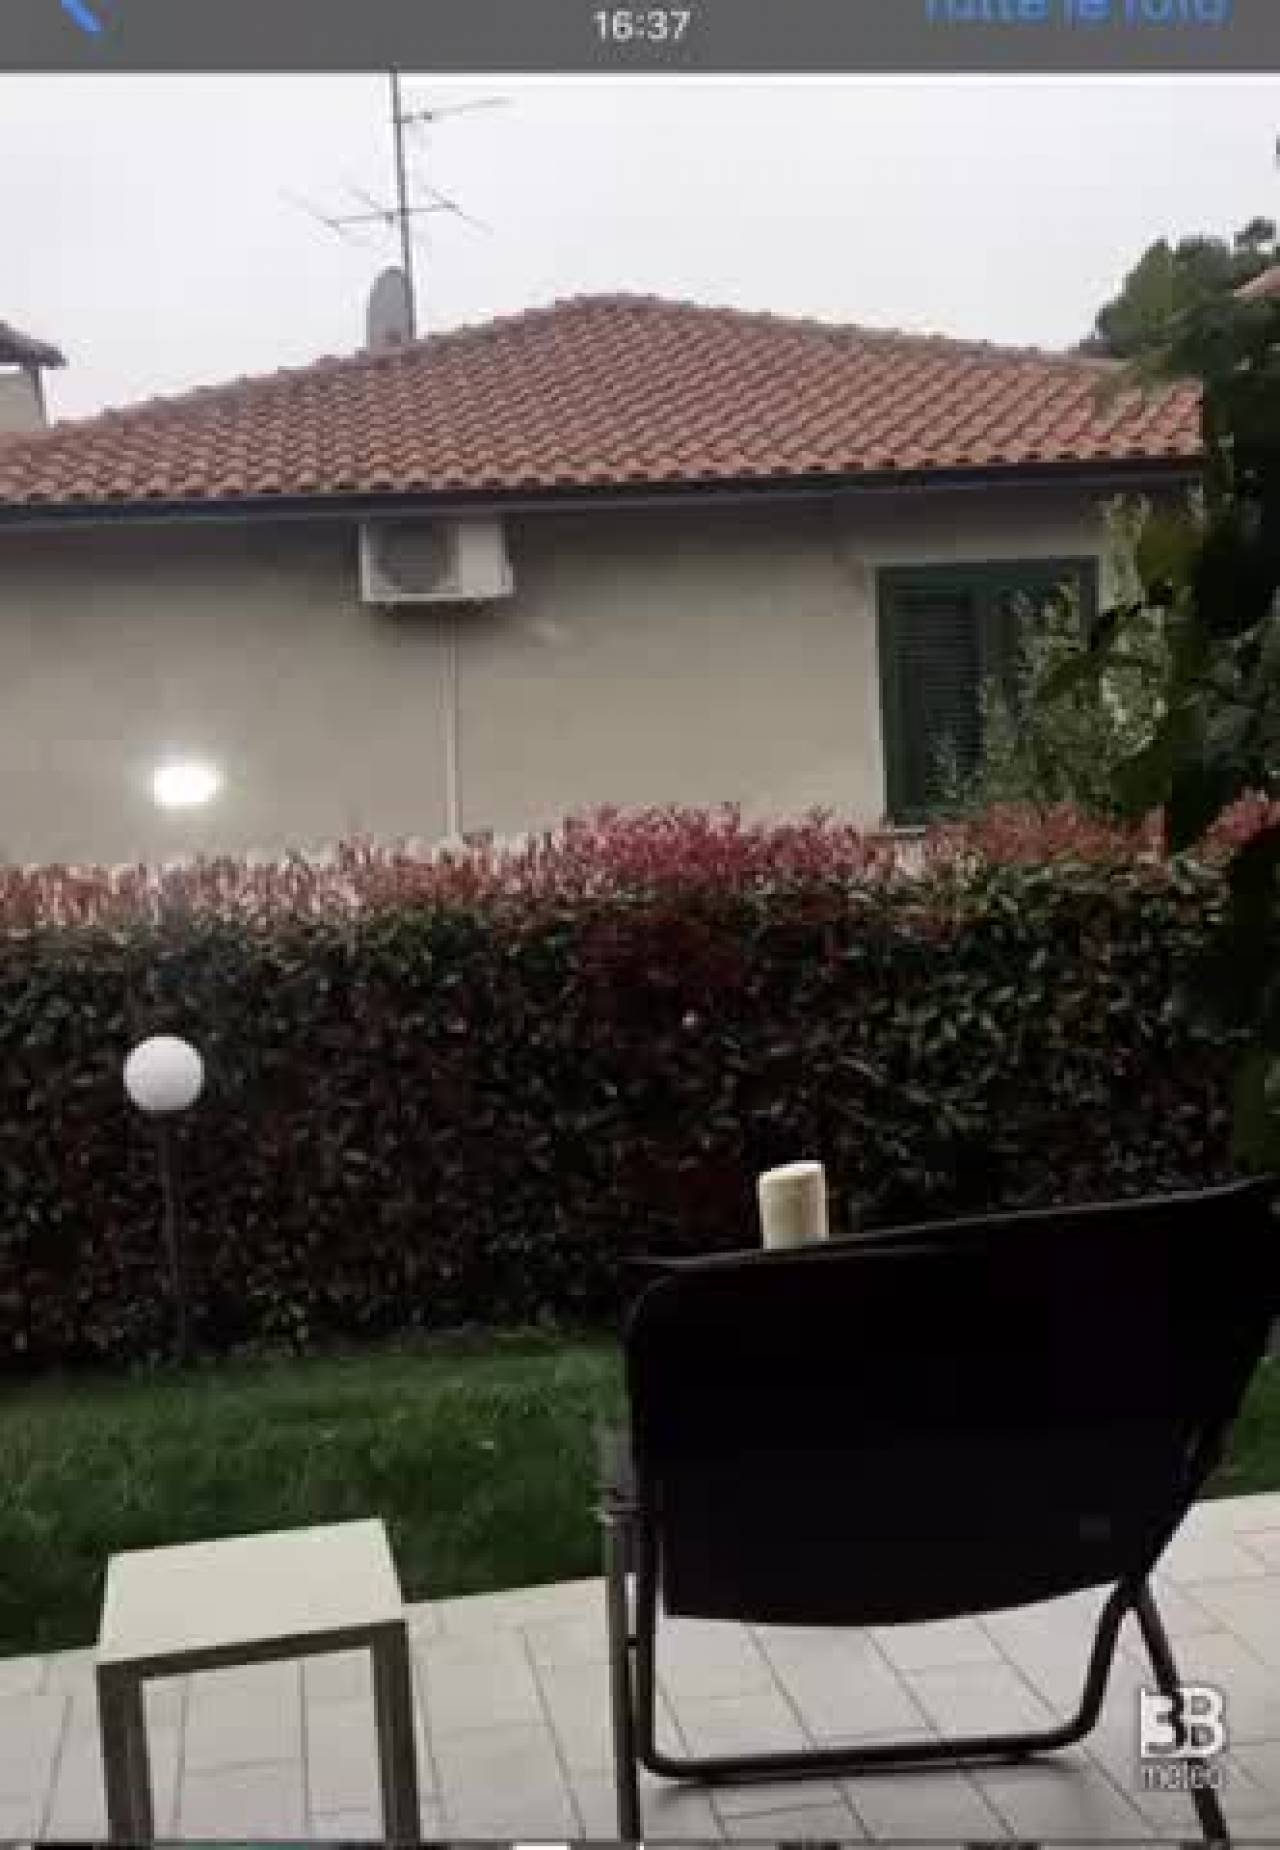 Cronaca meteo VIDEO: LA NEVE del 25 MARZO ad Appiano Gentile